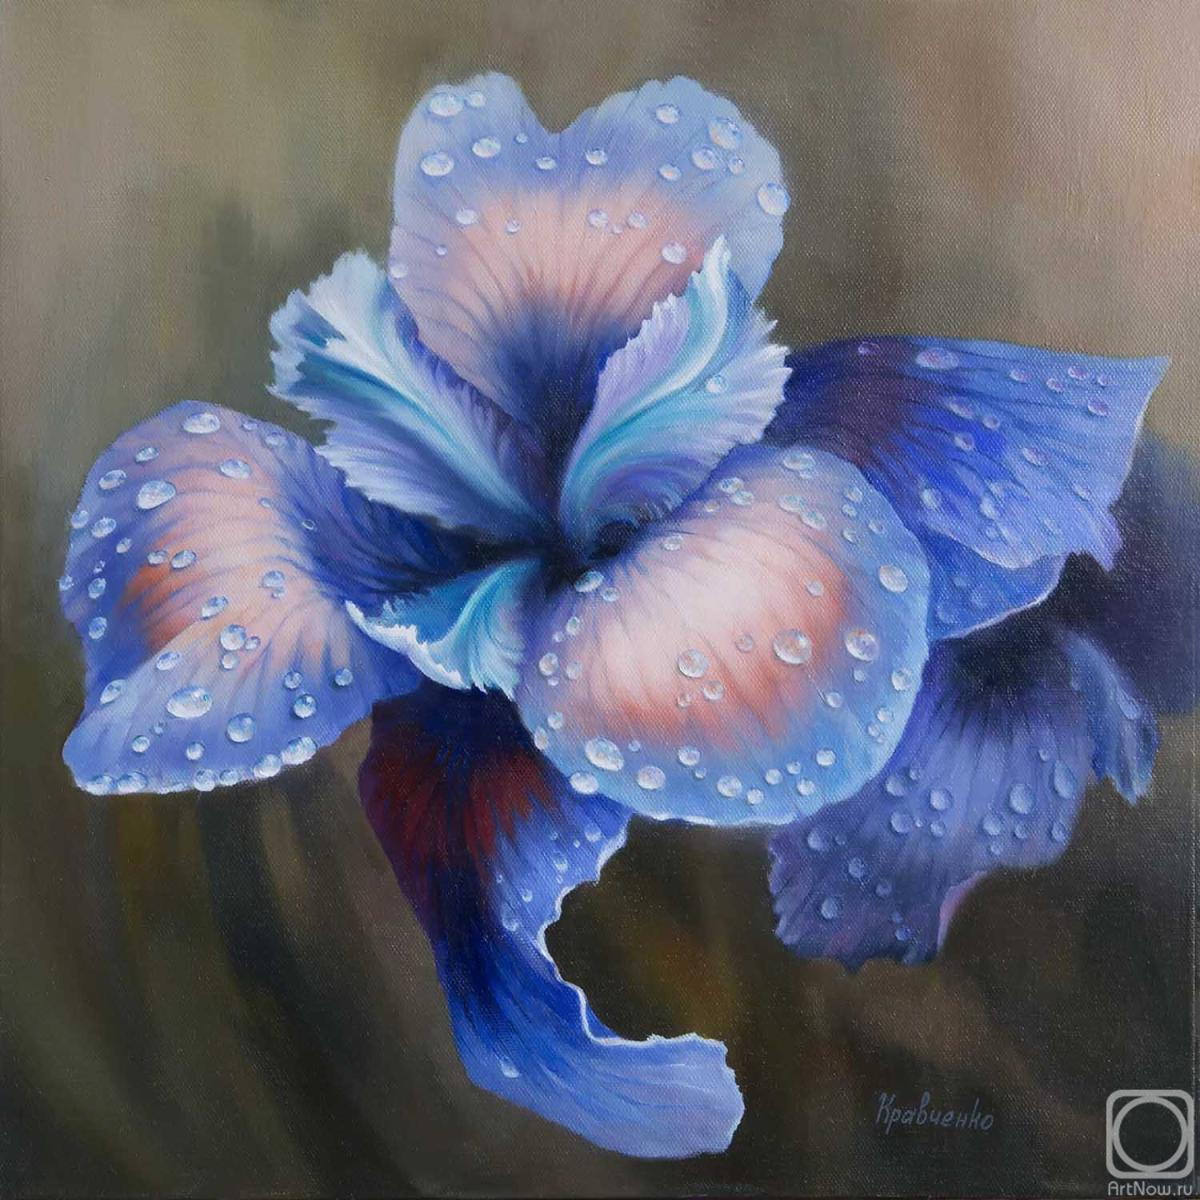 Kravchenko Yuliya. Iris Flower After Rain #2